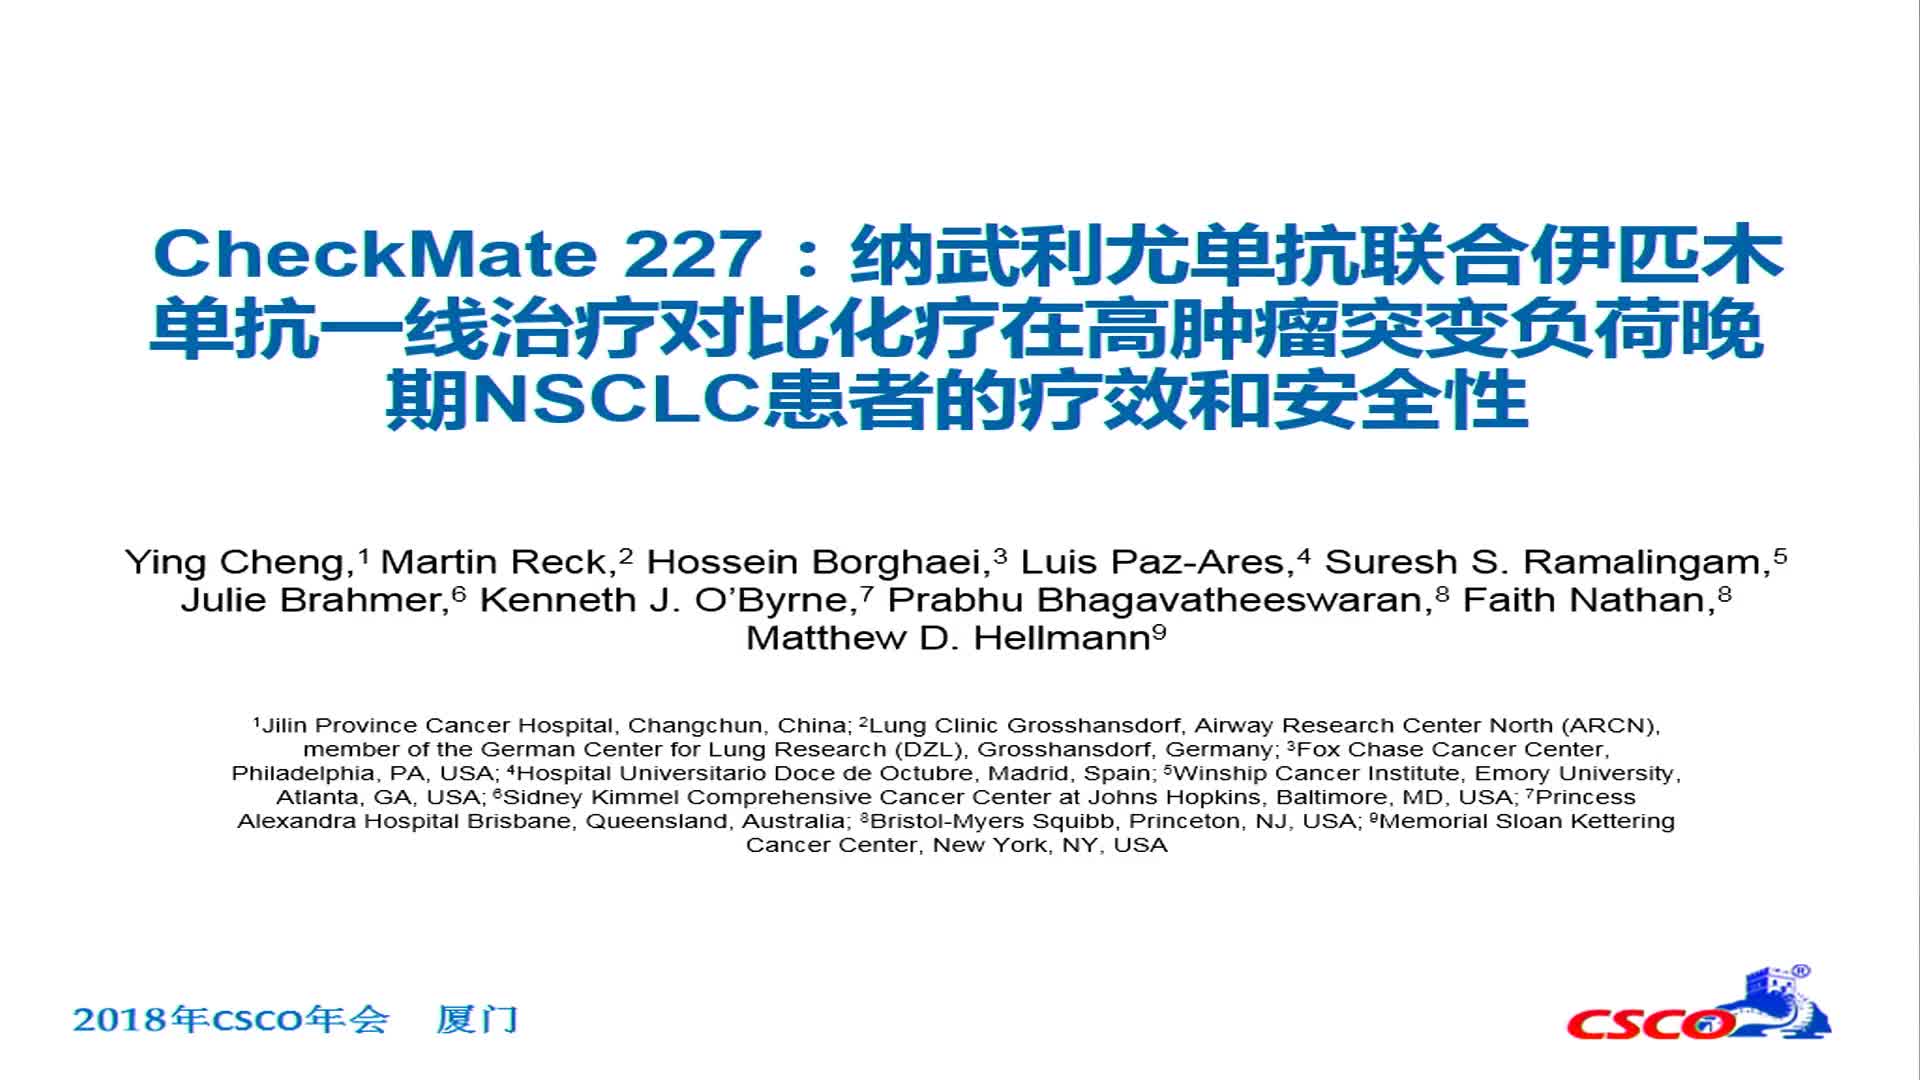 CheckMate 227：纳武利尤单抗联合伊匹木单抗一线治疗对比化疗在高肿瘤突变负荷晚期NSCLC患者的疗效和安全性